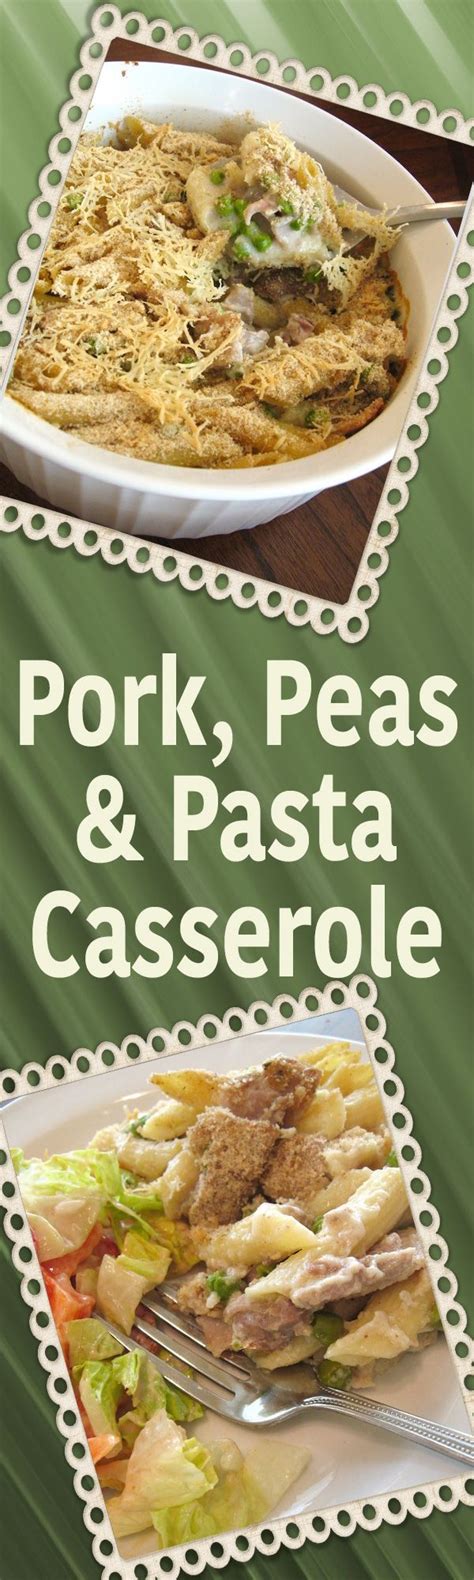 Place these into a casserole dish. Pork Peas & Pasta Casserole | Leftover pork recipes, Pork ...